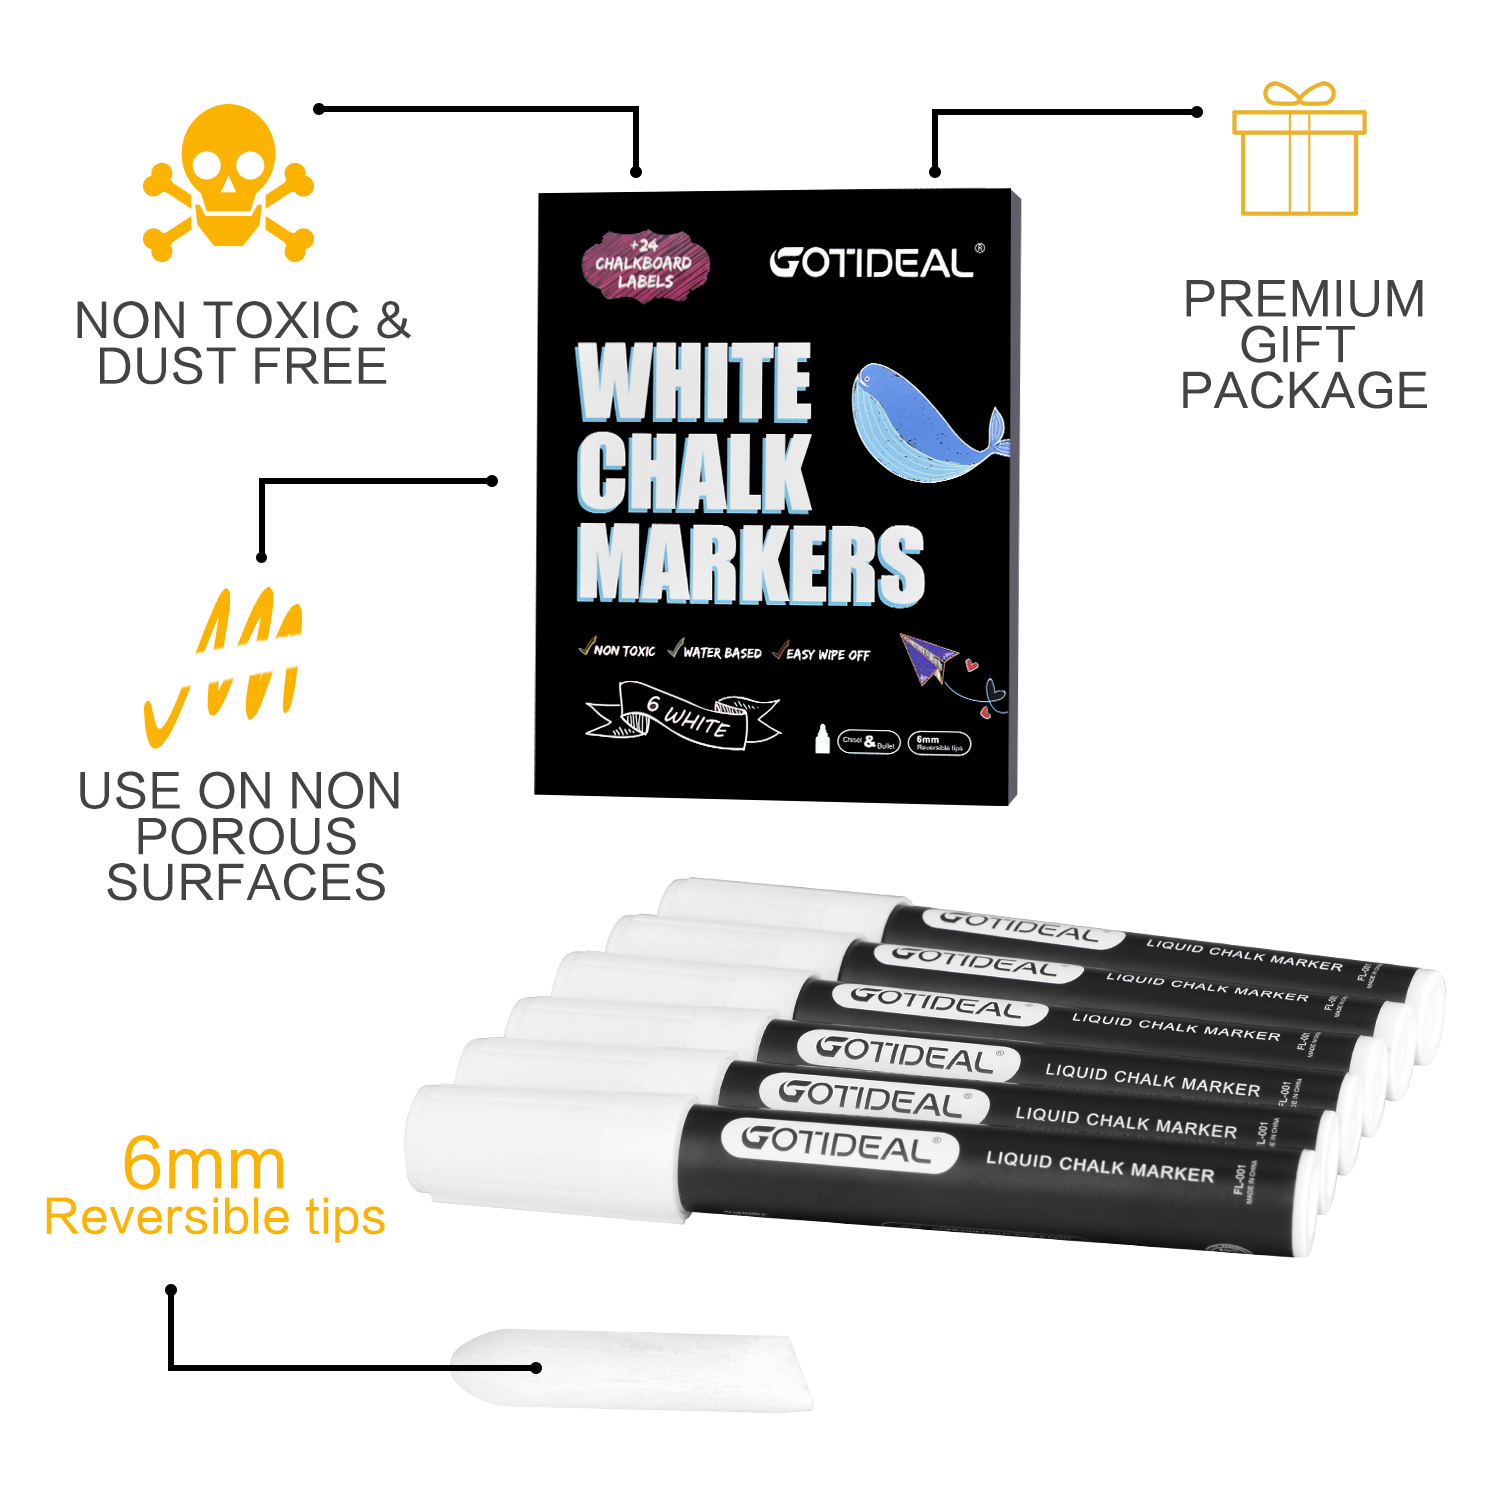 GOTIDEAL Liquid Chalk Markers, 6 Pack White Chalk Pens for Windows, Chalkboard Signs, Blackboard, Glass Painting, Dry & Wet Erase - 6mm Reversible Medium Tip-24 Free Chalkboard Labels